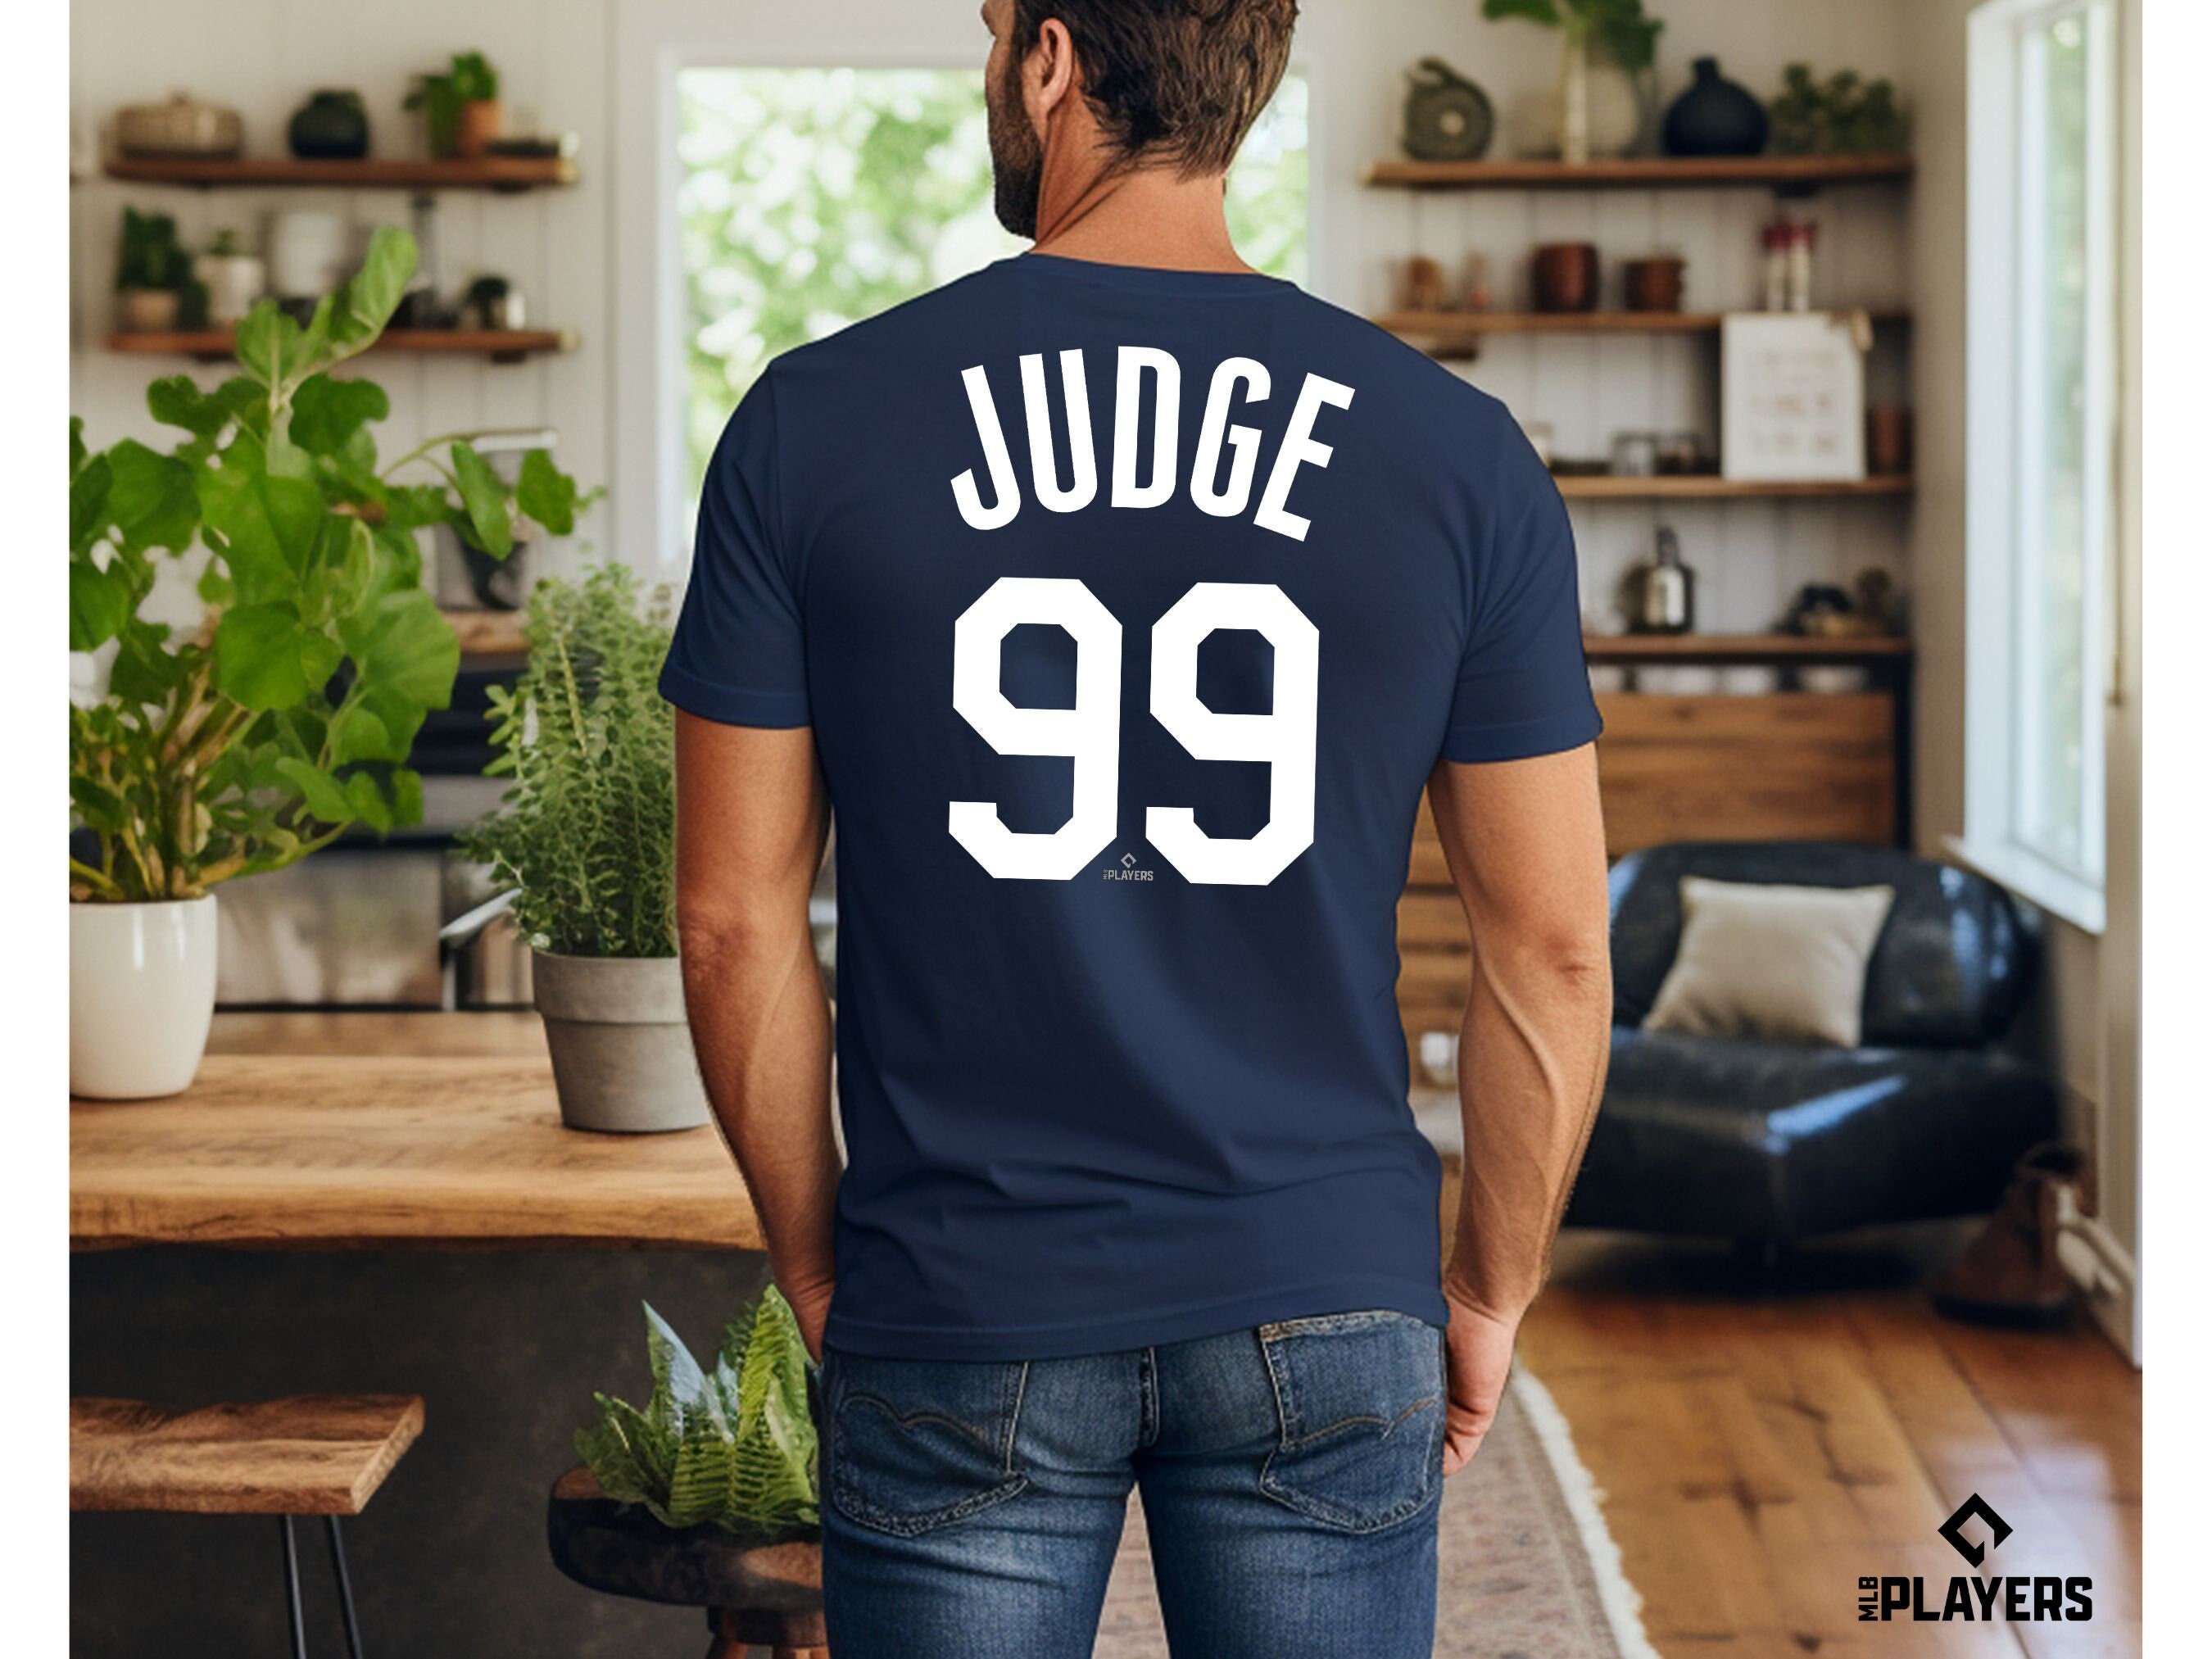 judge 62 shirts